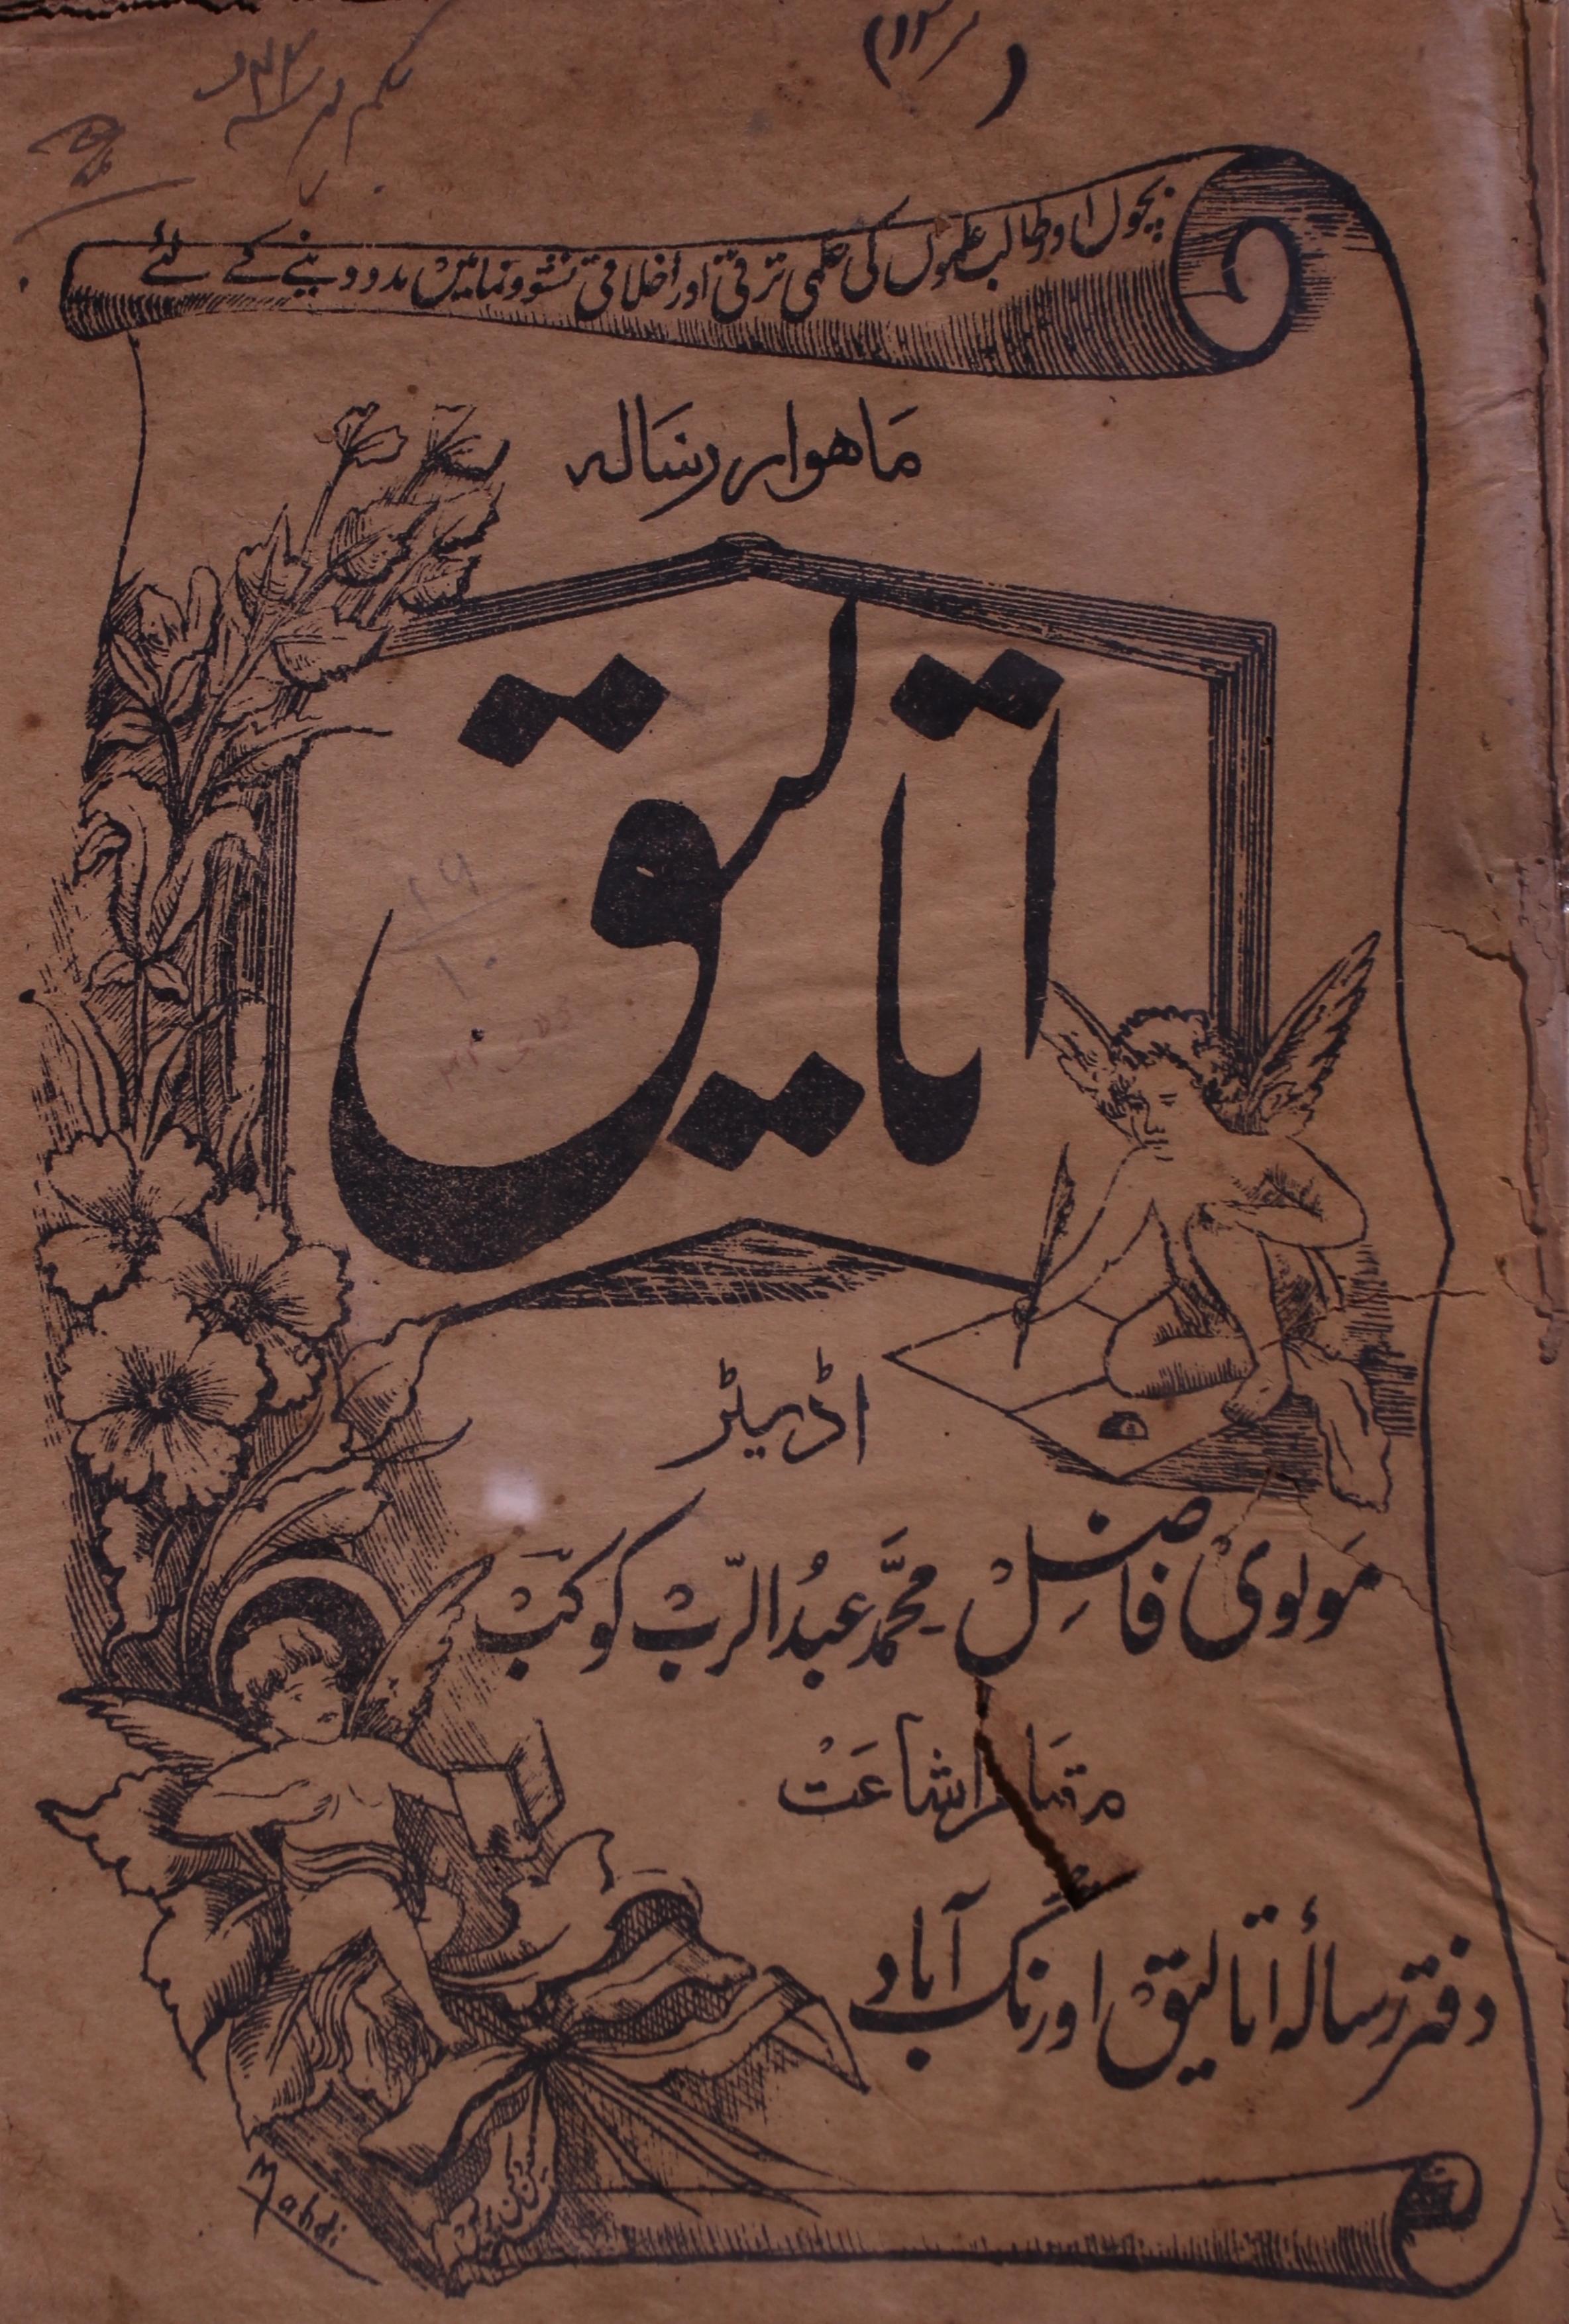  Ataliq Jild 16 No 10 July 1933